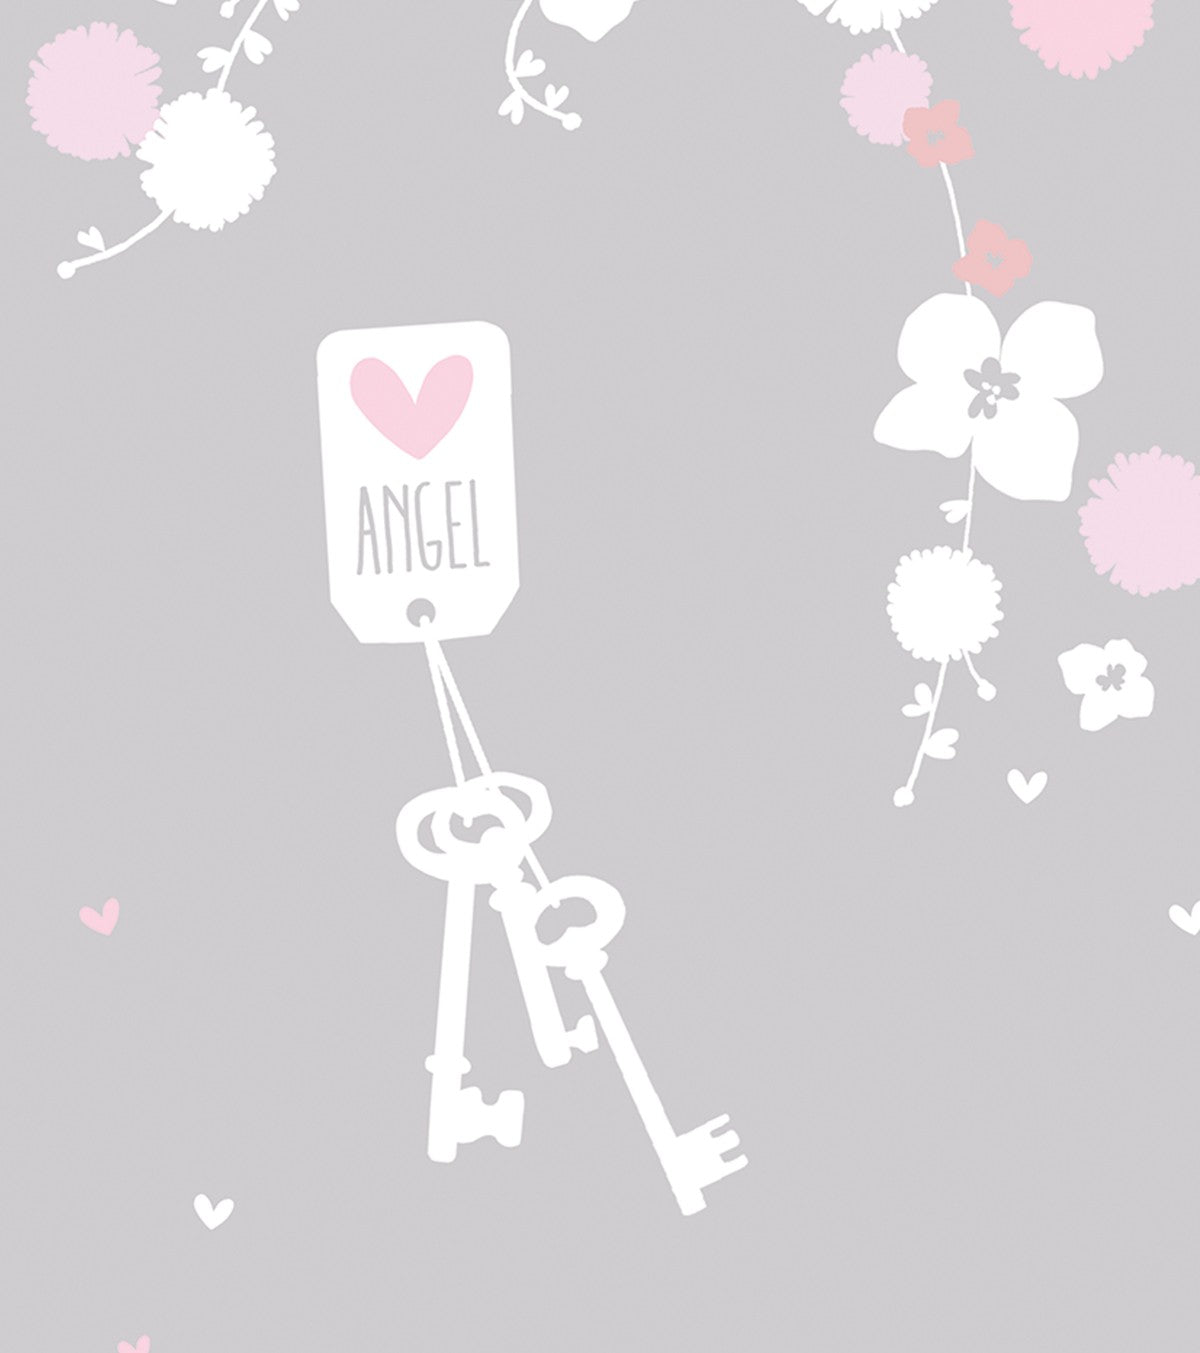 ANGEL - Affiche enfant - Fleurs (rose et blanc)